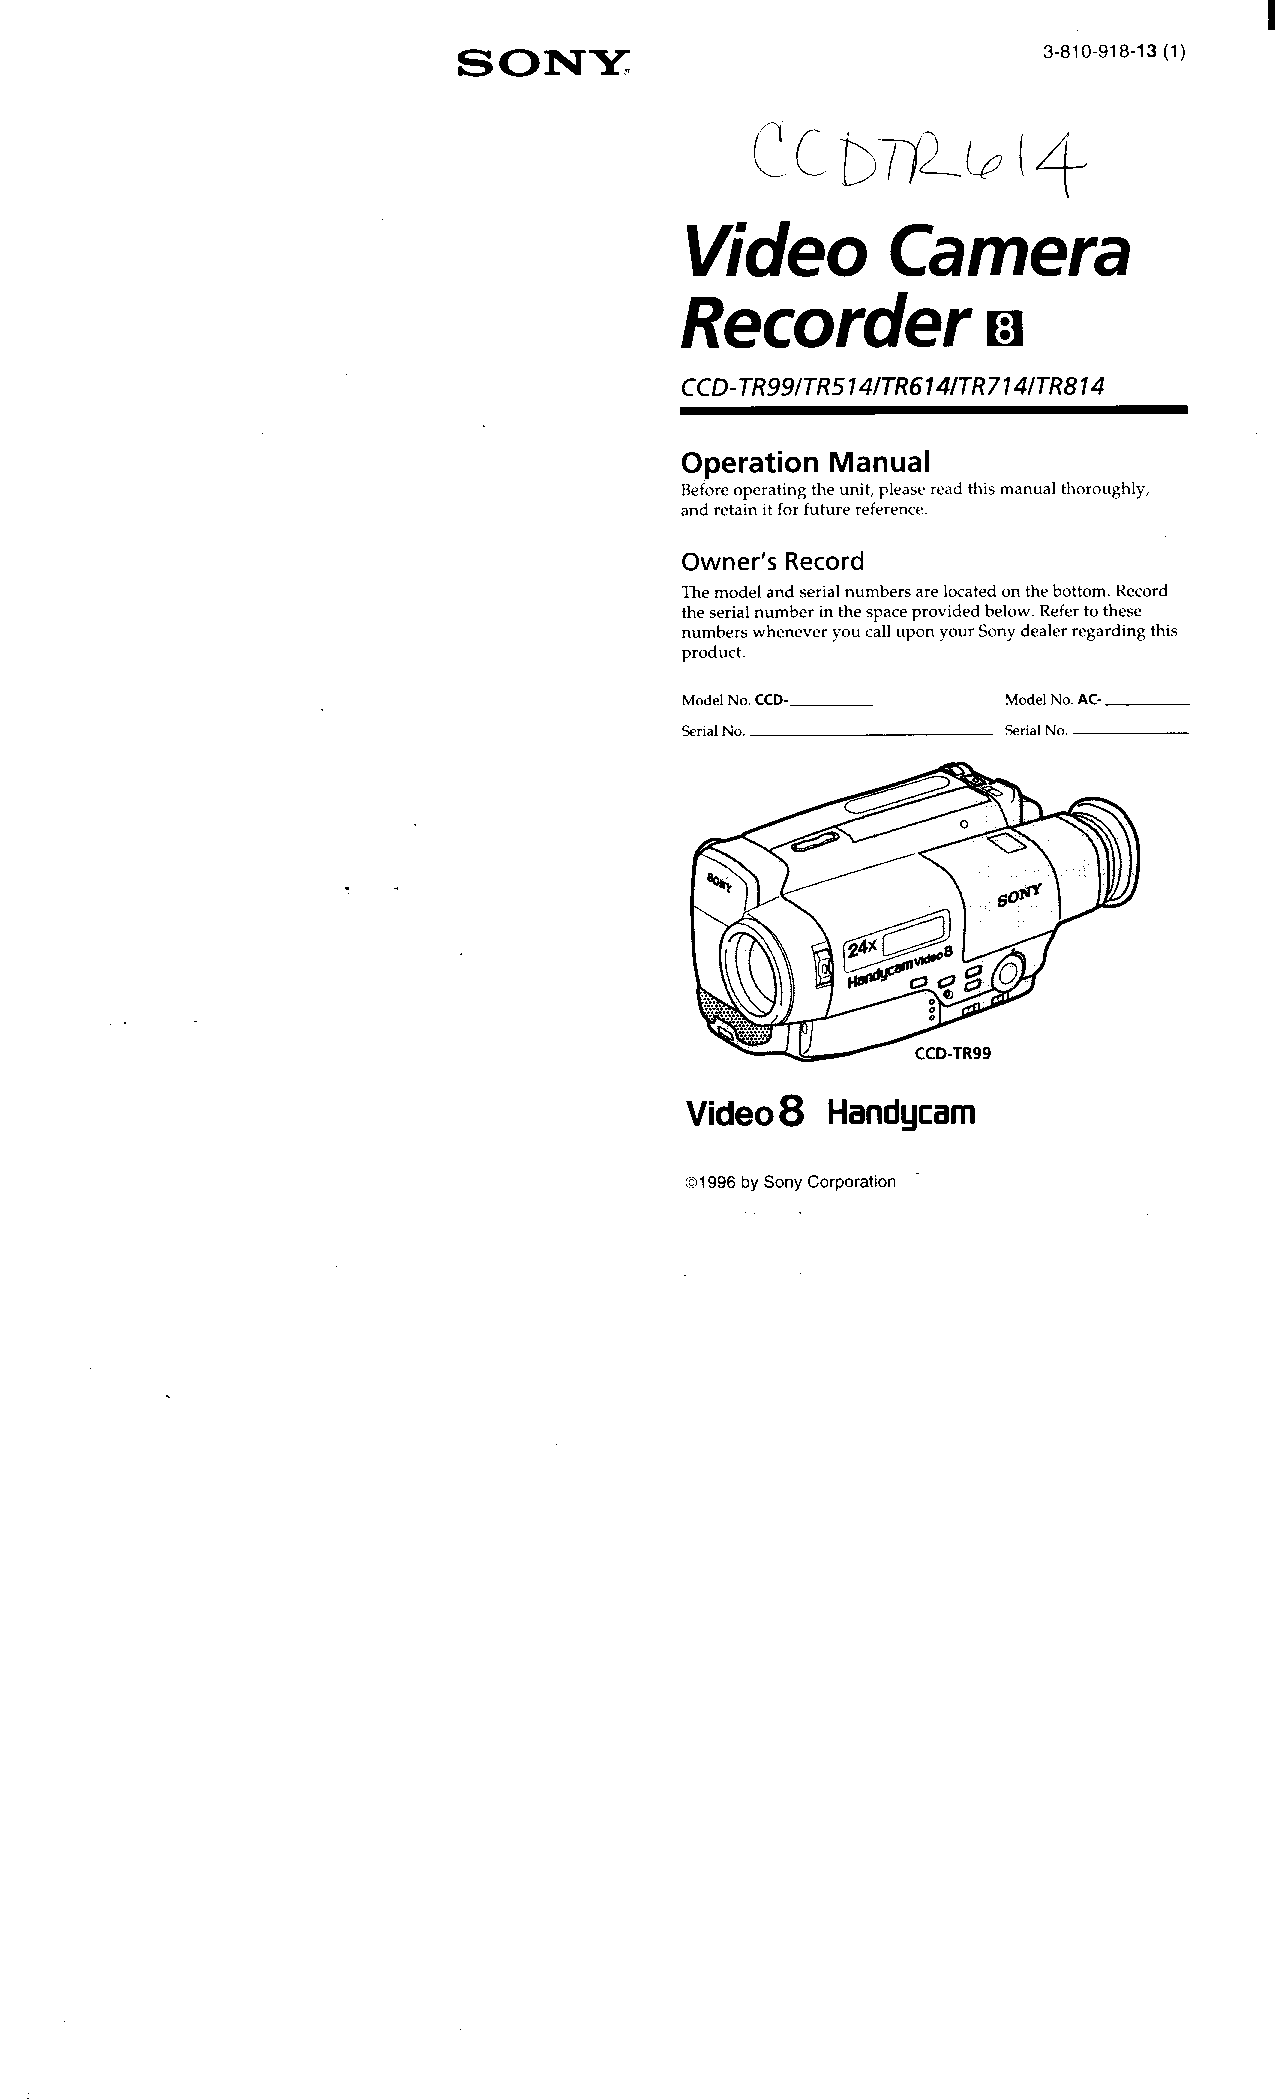 Sony CCD-TR614, CCD-TR814, CCD-TR99 User Manual